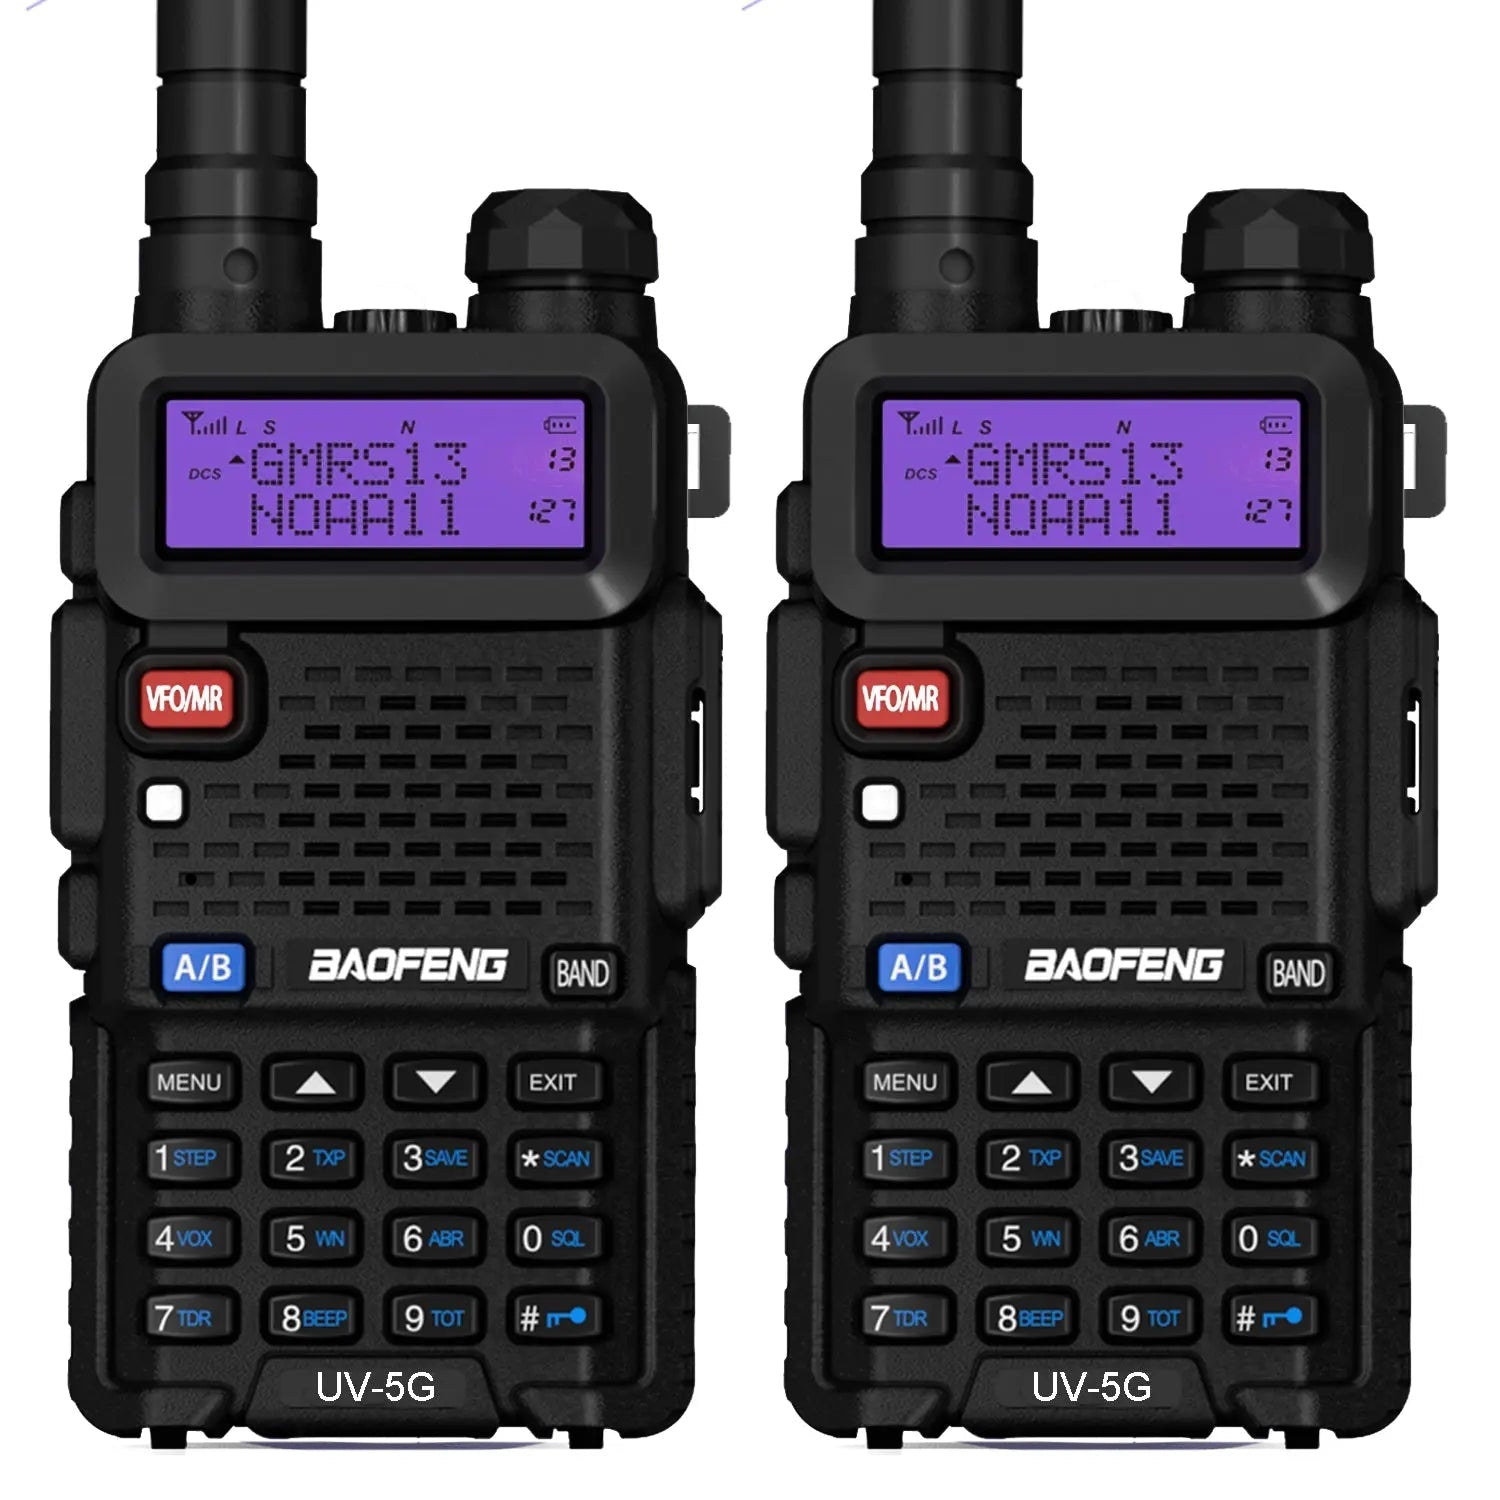 Baofeng UV-16 Long Range Walkie Talkie Handheld Two Way Radio - Any Radios